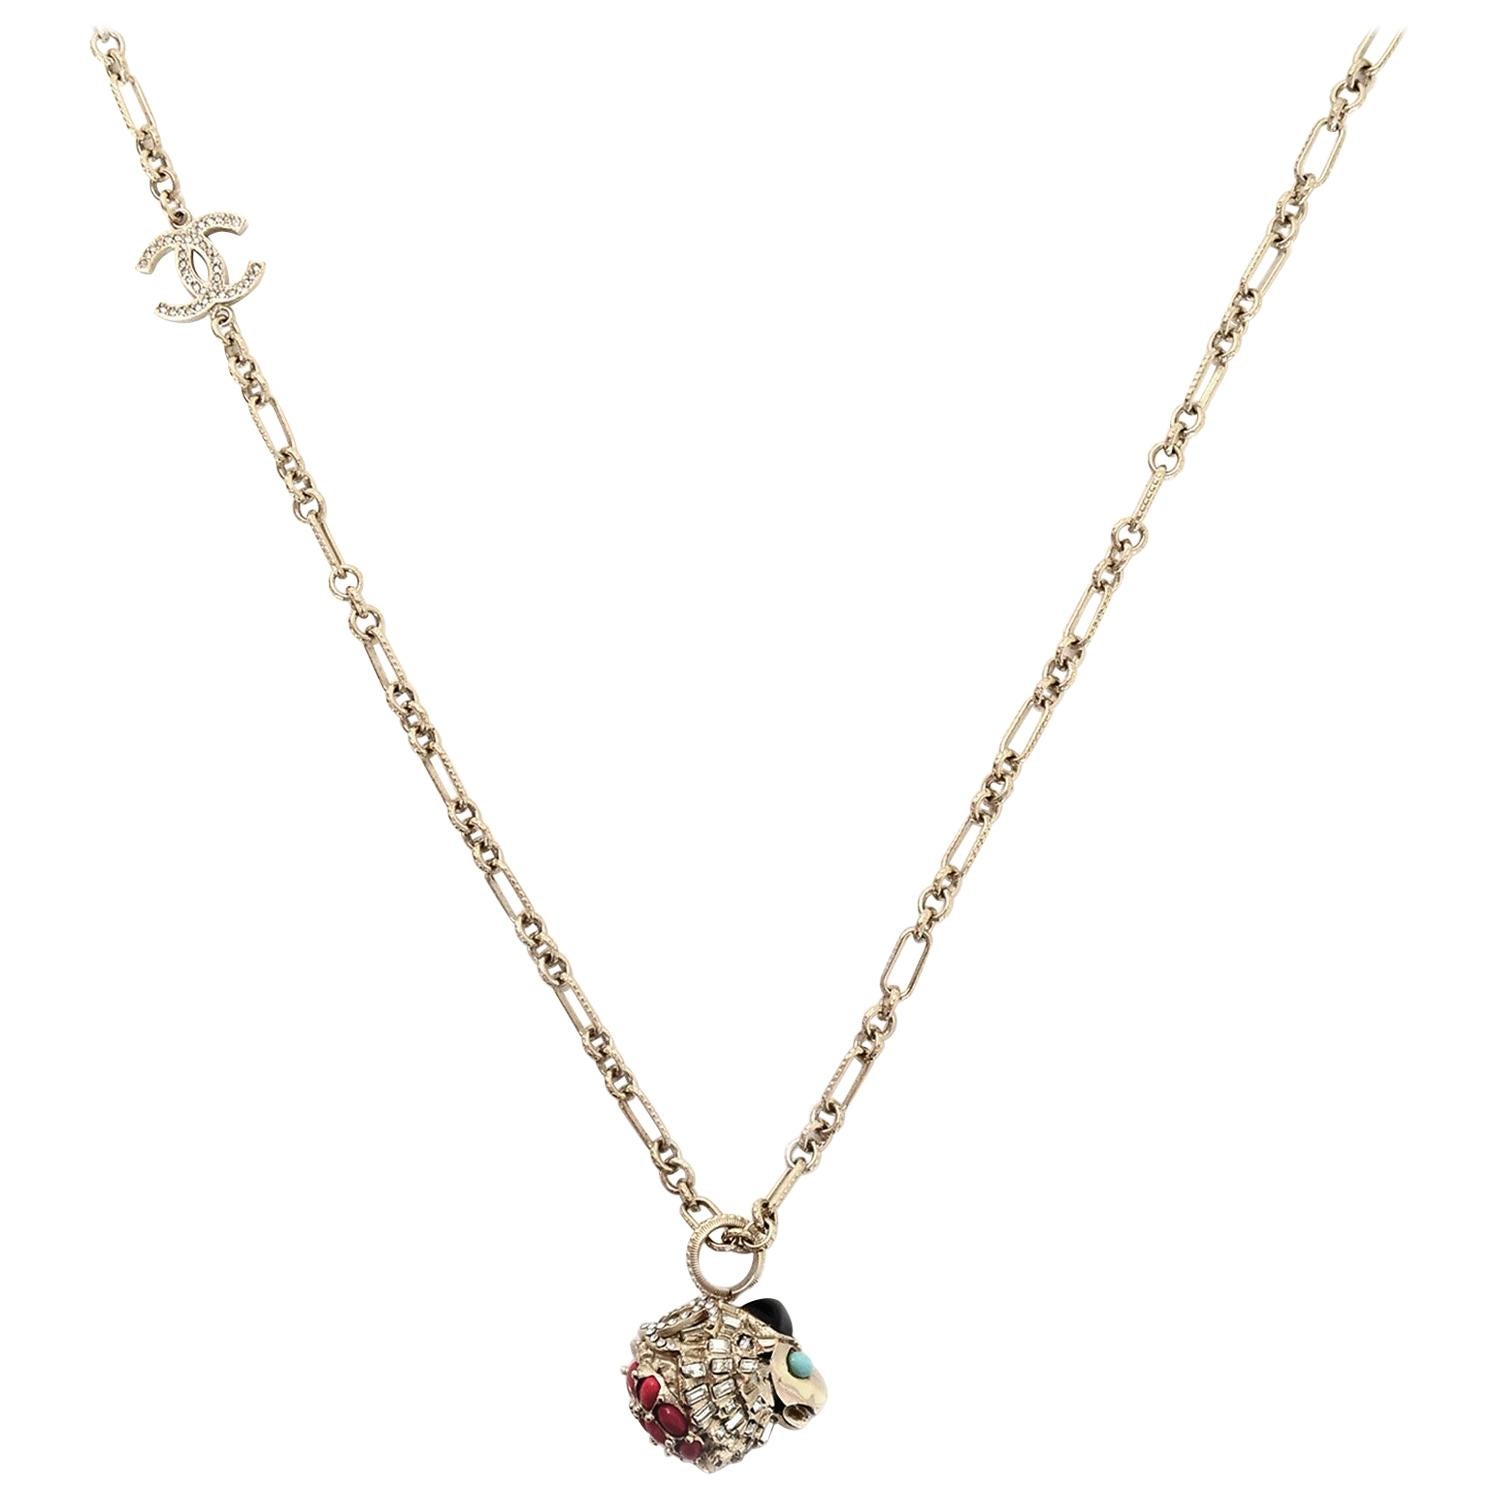 Chanel Light Goldtone Crystal/Stone Lion Head Pendant Long Chainlink CC Necklace